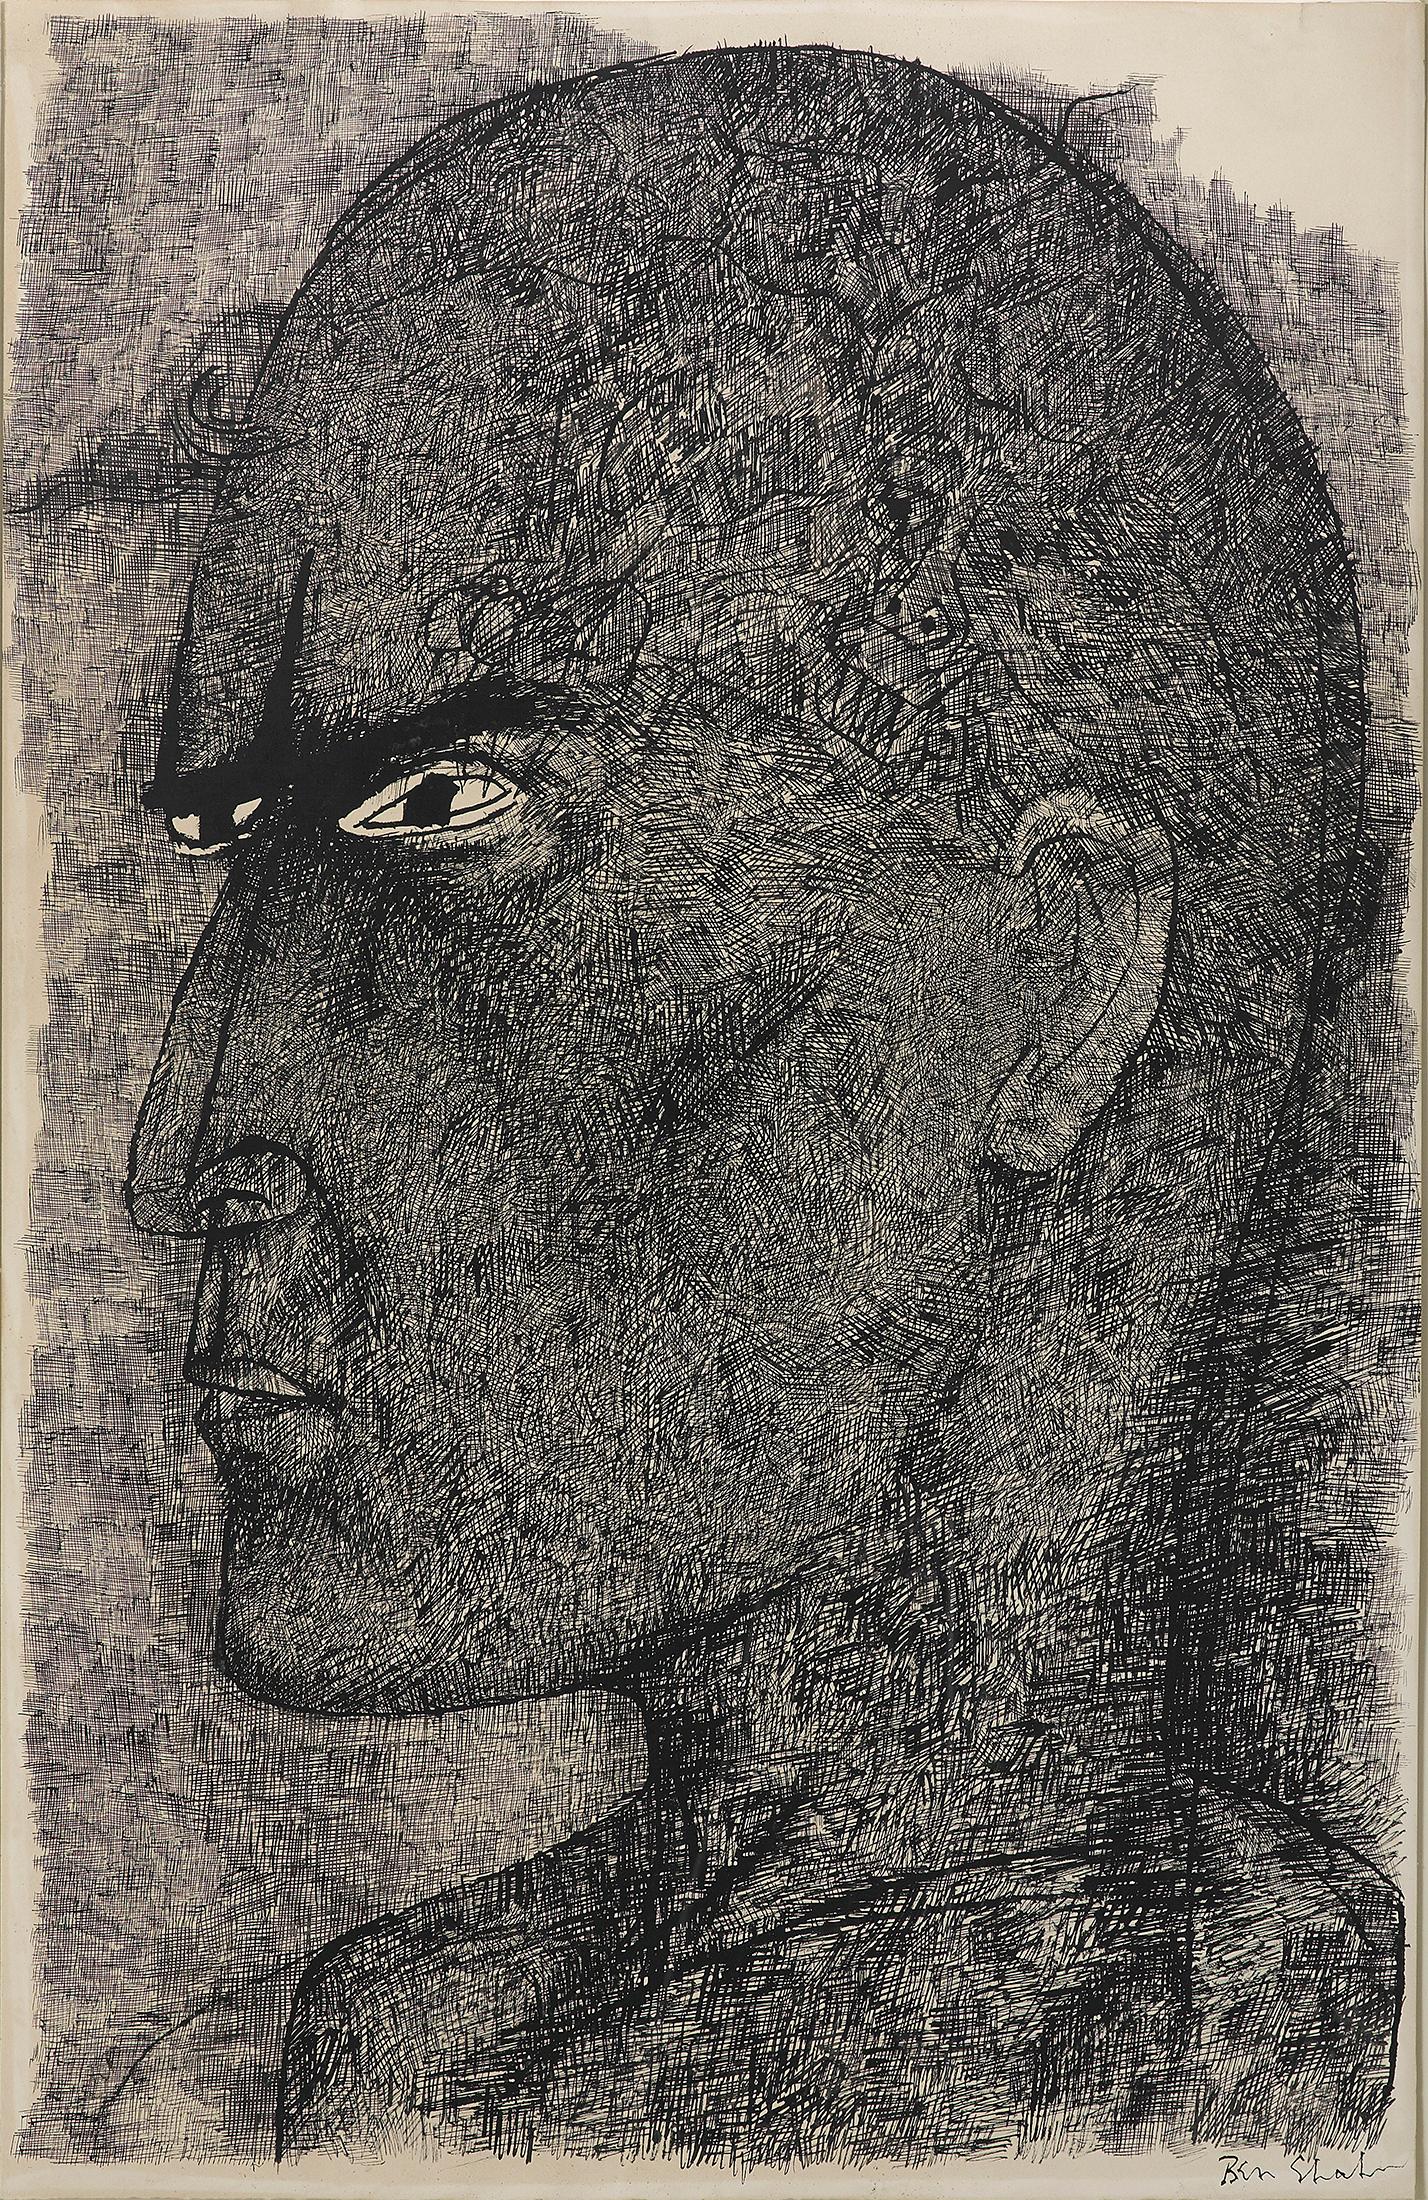 Ben Shahn Portrait Painting - "Kuboyama" Saga of the Lucky Dragon He died from H-bomb testing at Bikini Island